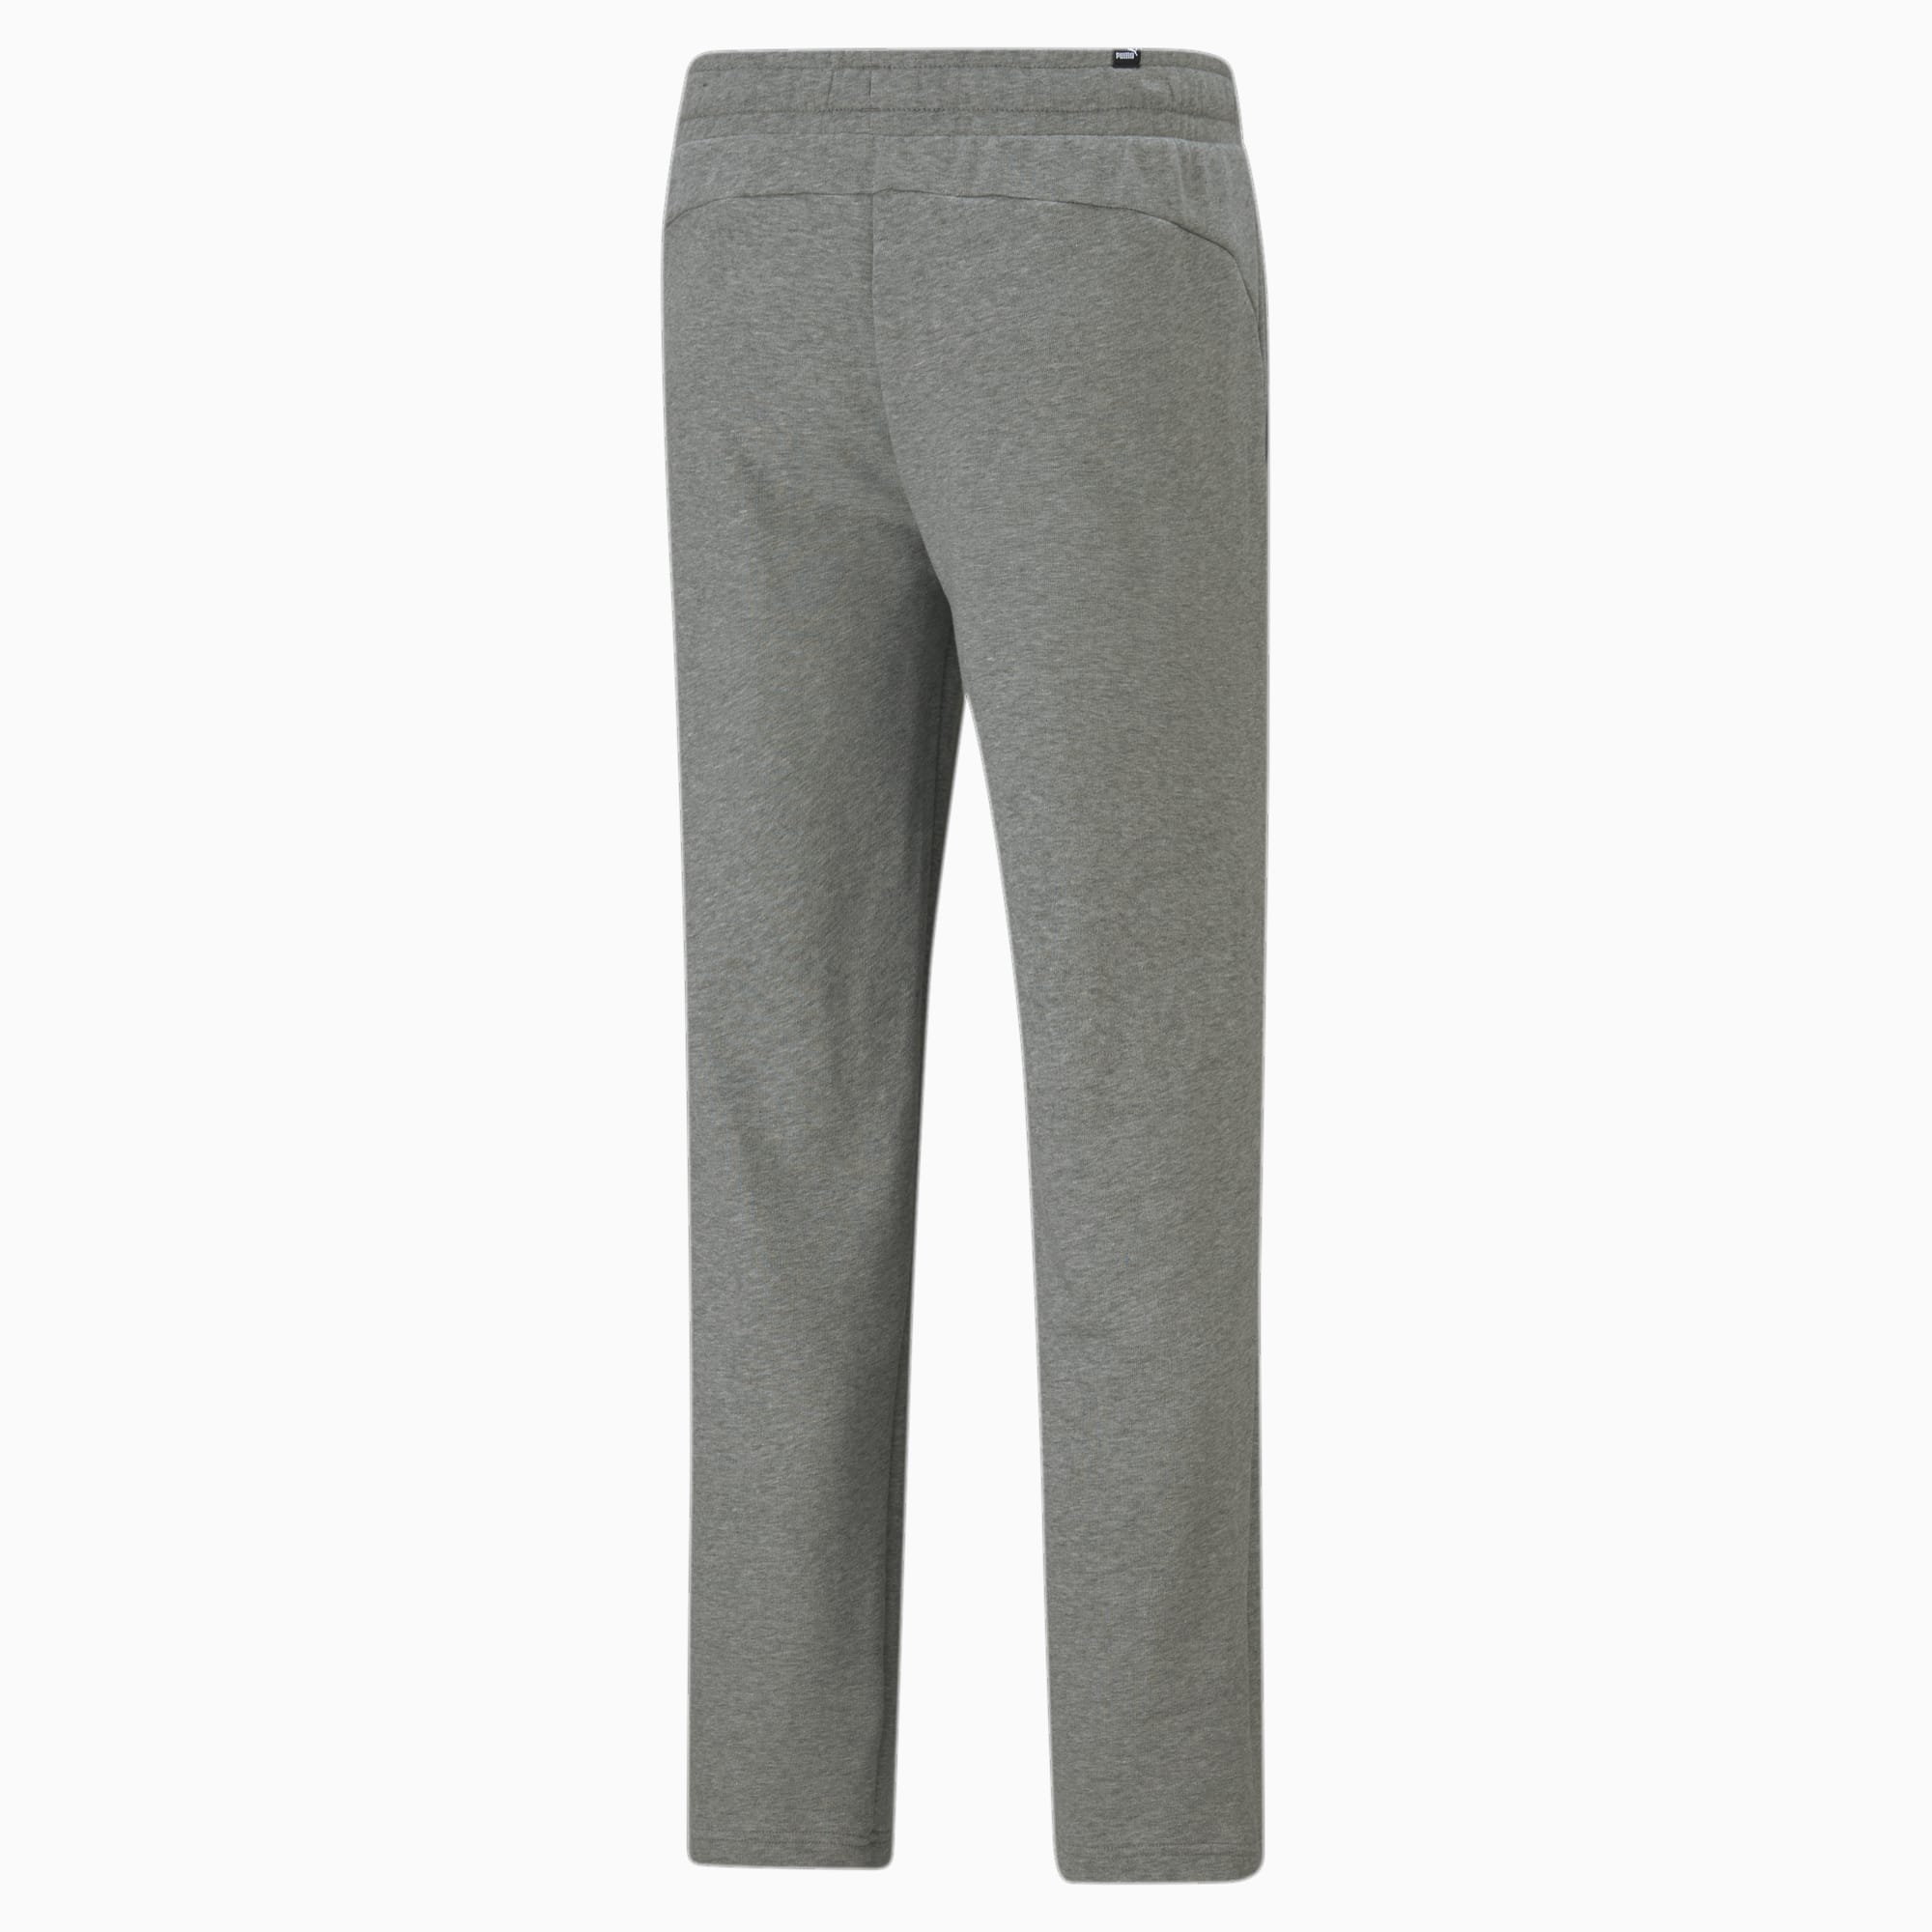 PUMA Essentials Logo Men's Sweatpants, Medium Grey Heather, Clothing